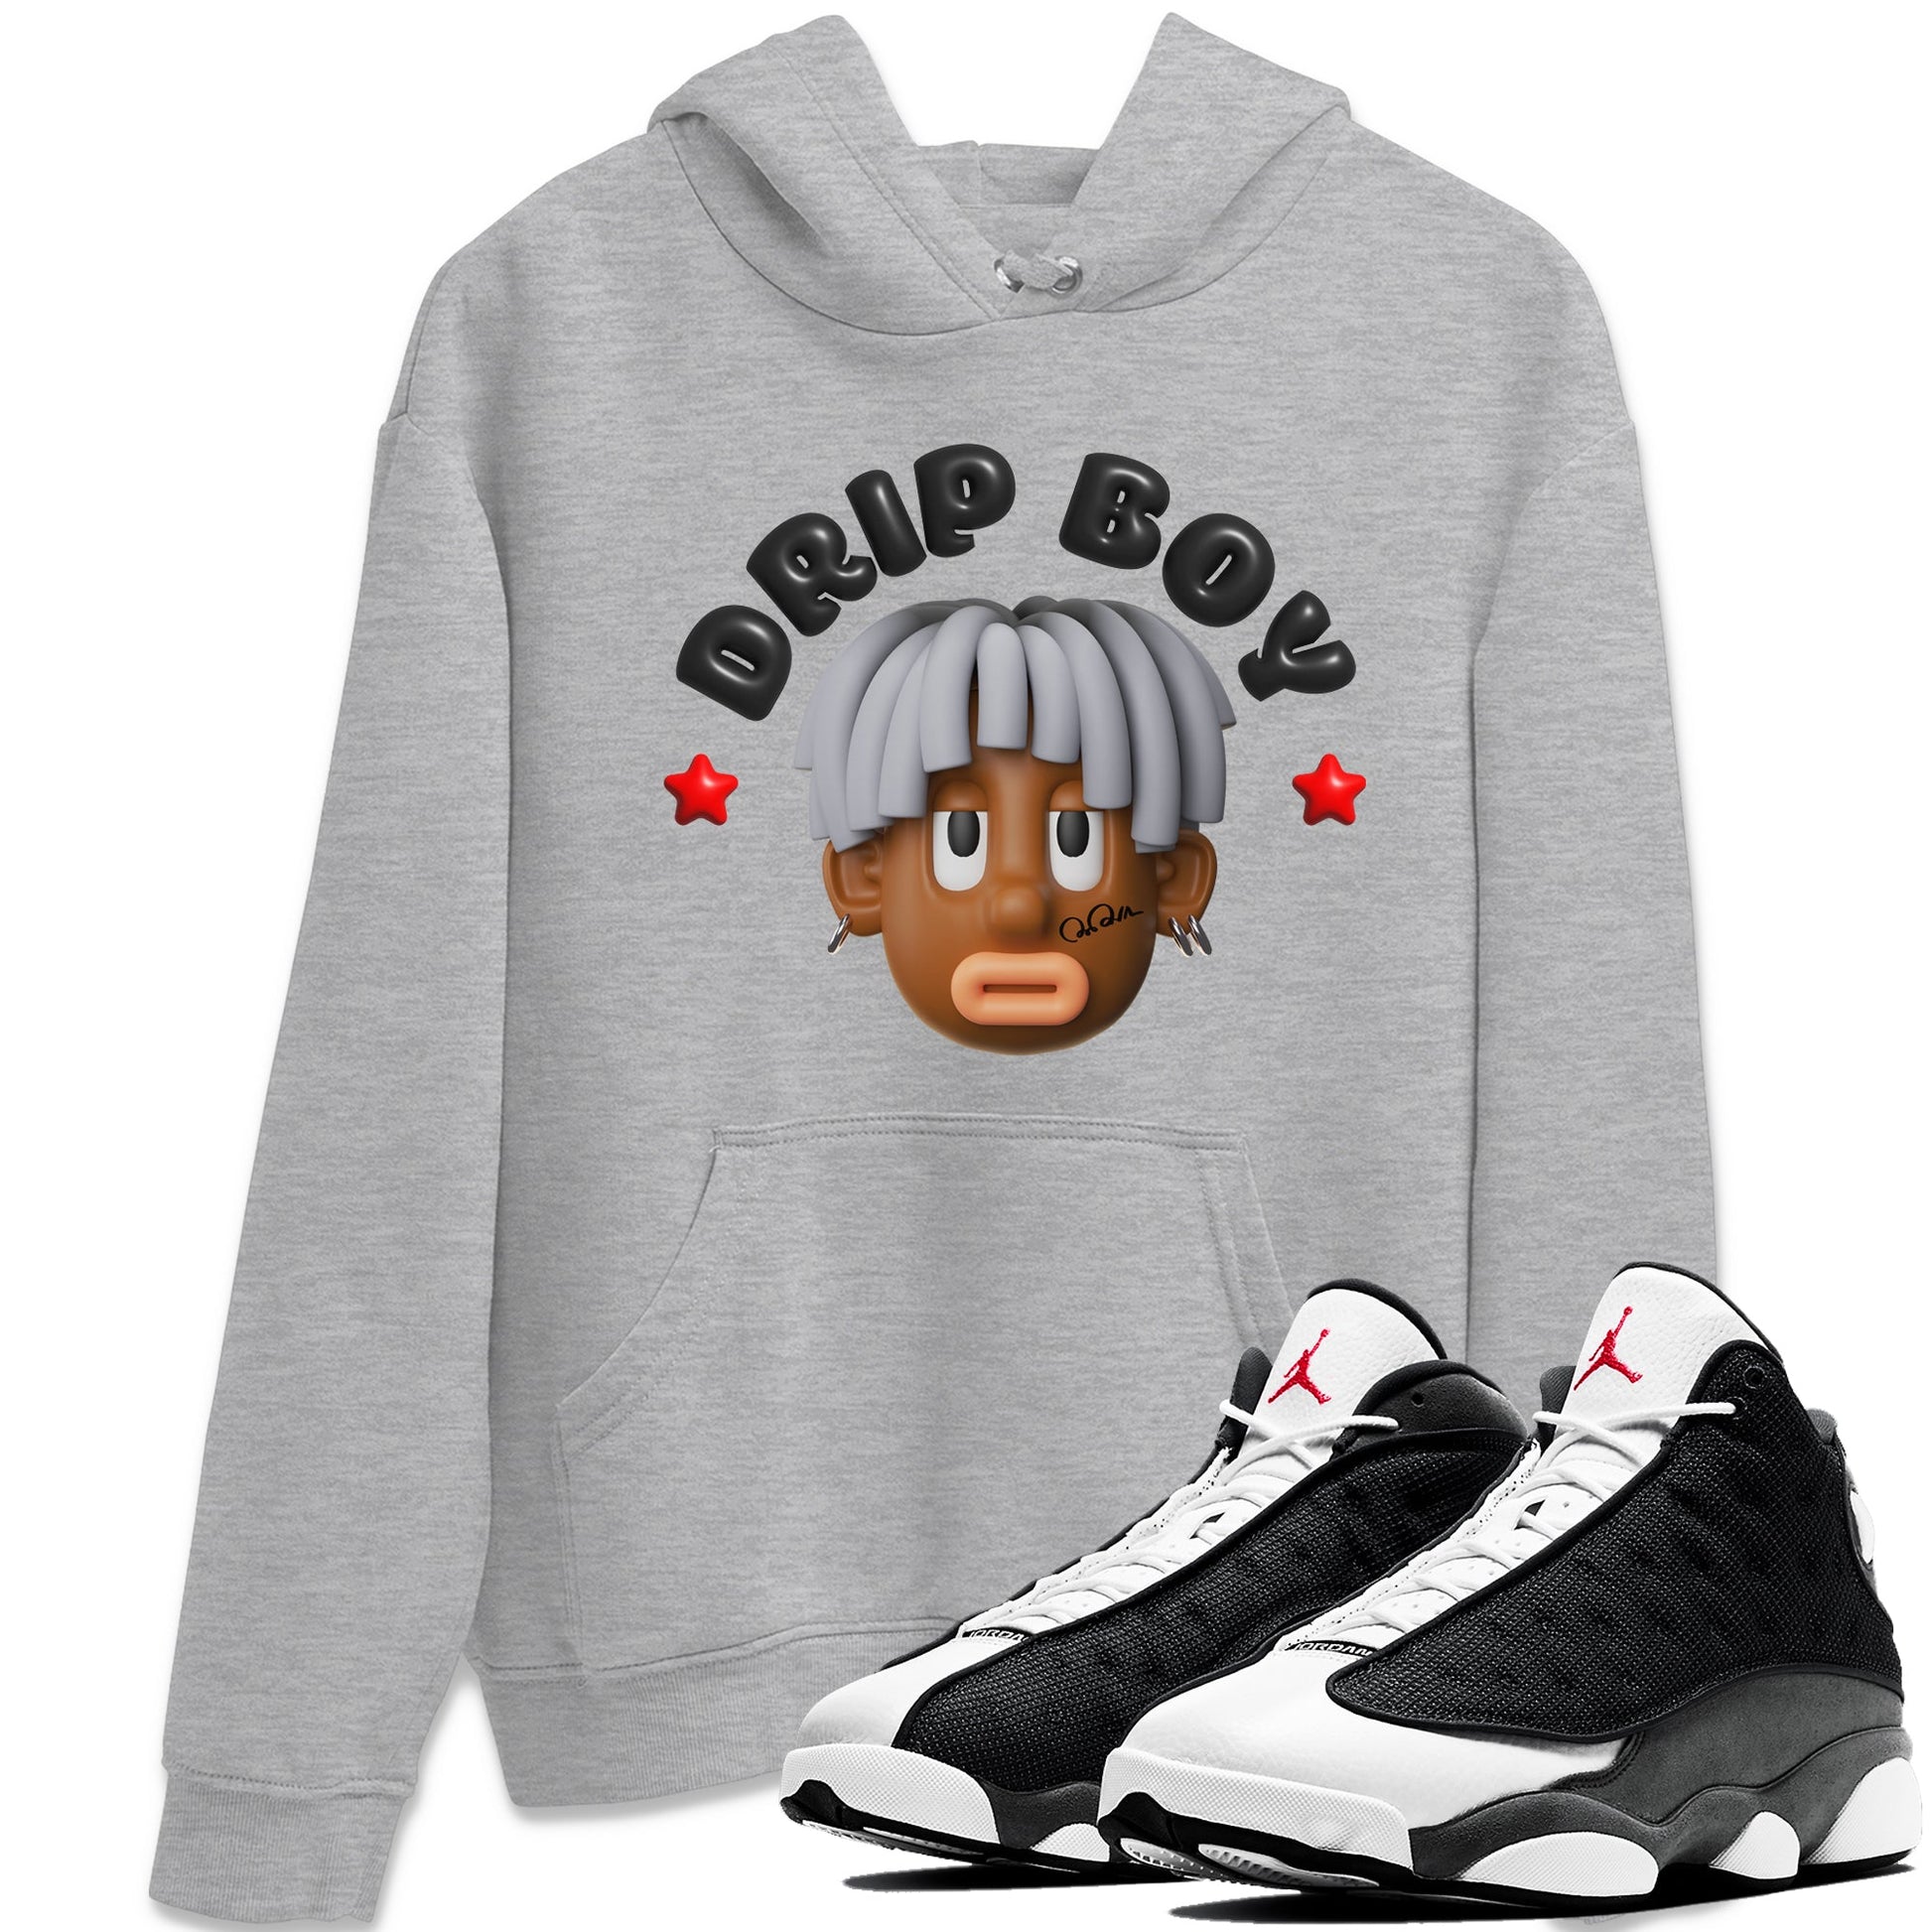 Air Jordan 13 Black Flint Sneaker Tees Drip Gear Zone Drip Boy Sneaker Tees AJ13 Retro Black Flint Shirt Unisex Shirts Heather Grey 1